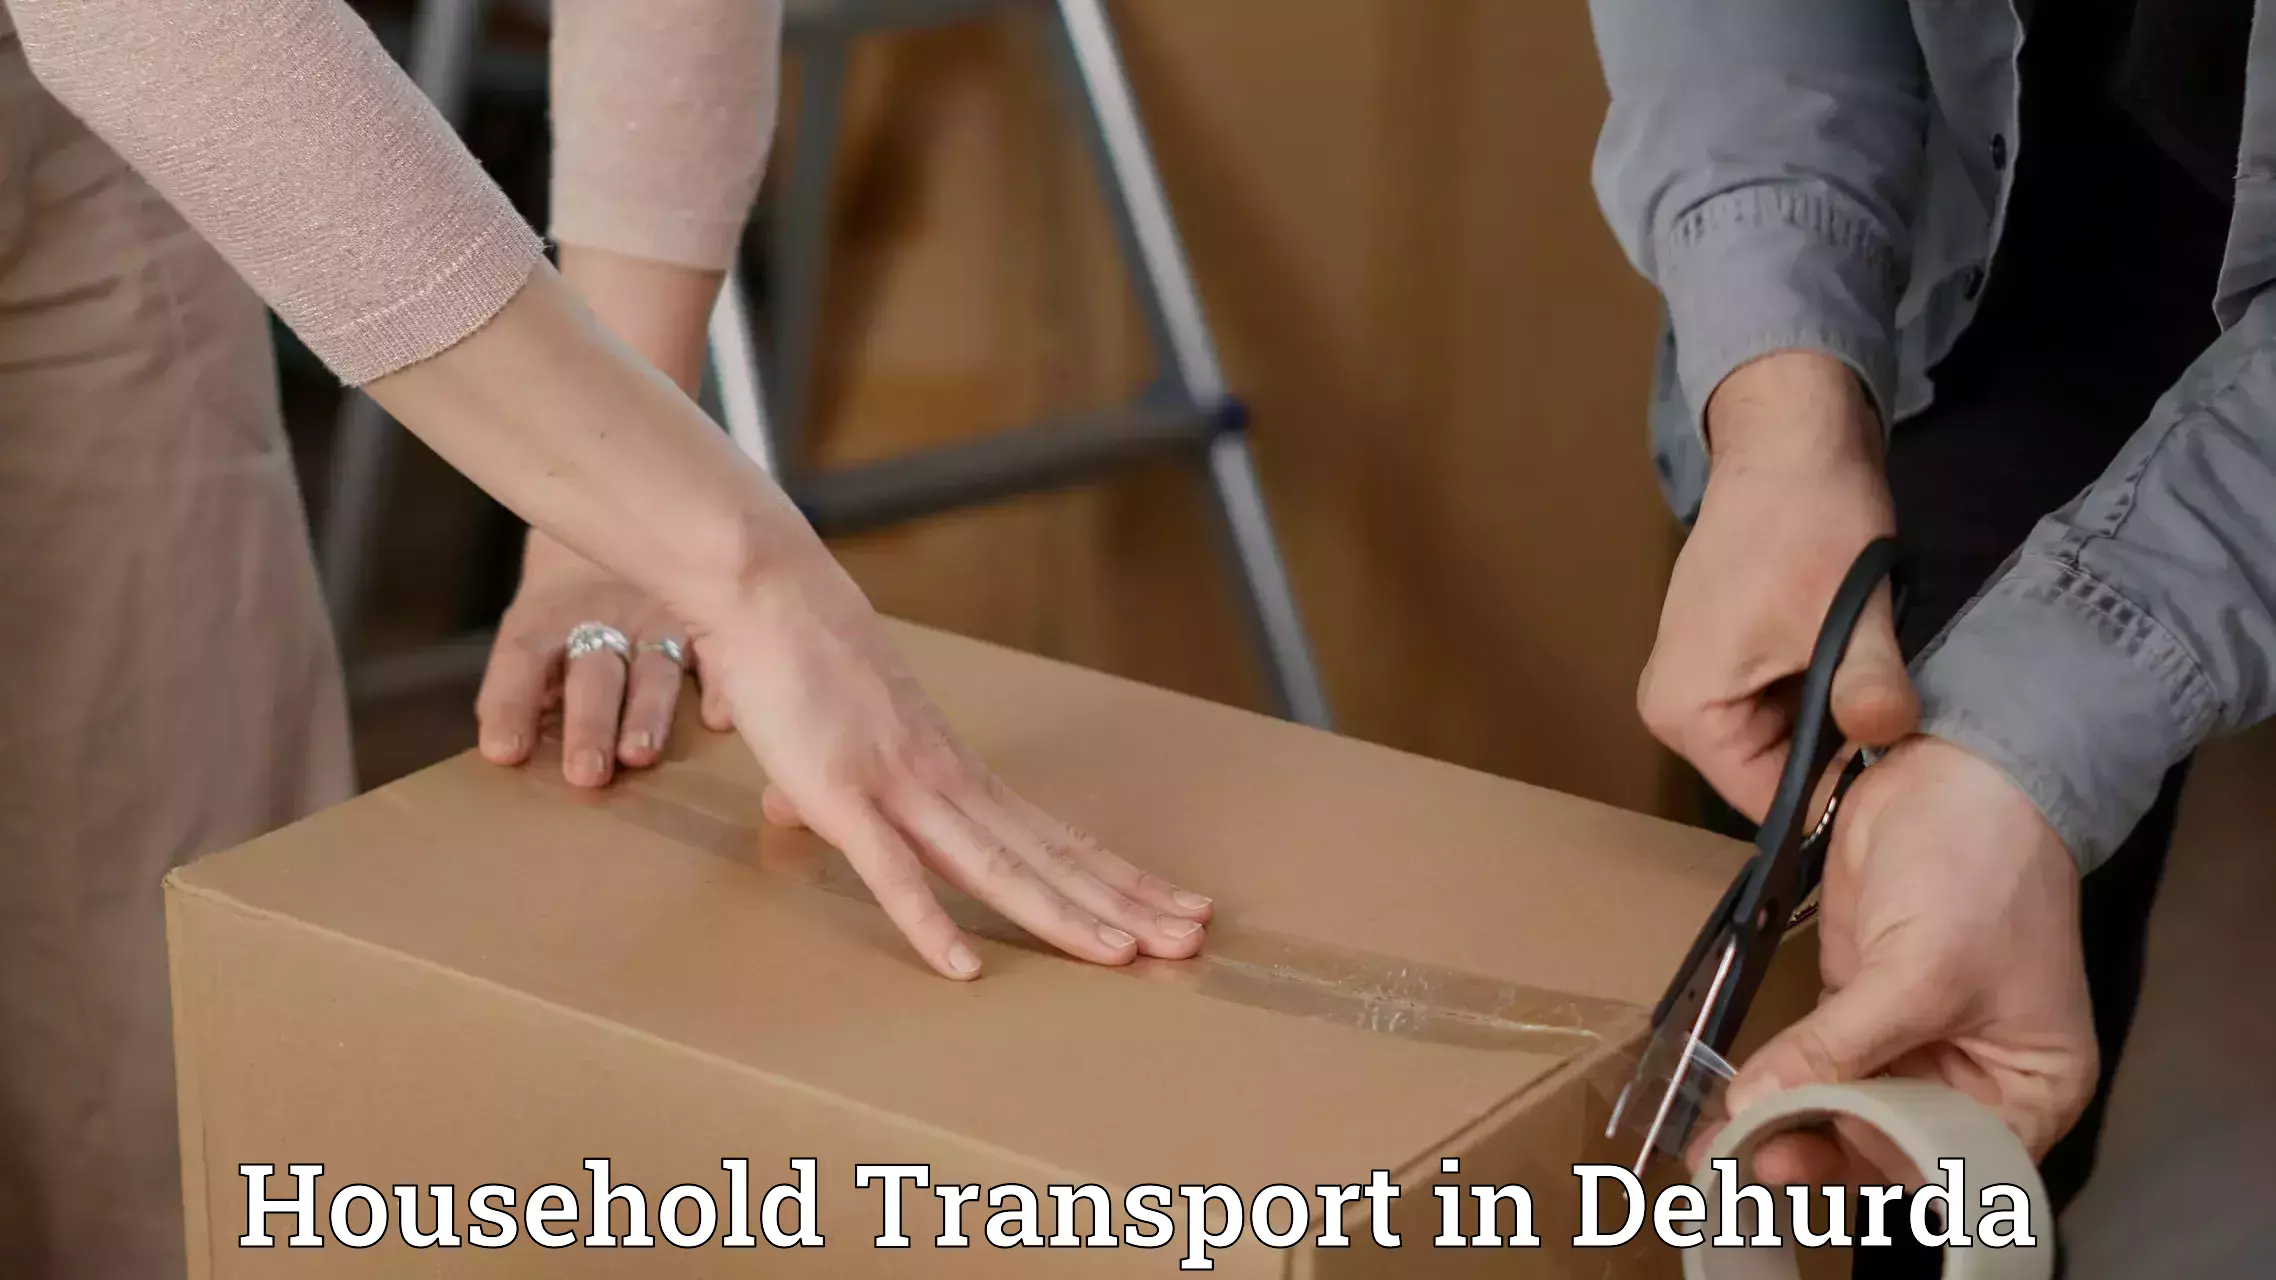 Household goods delivery in Dehurda